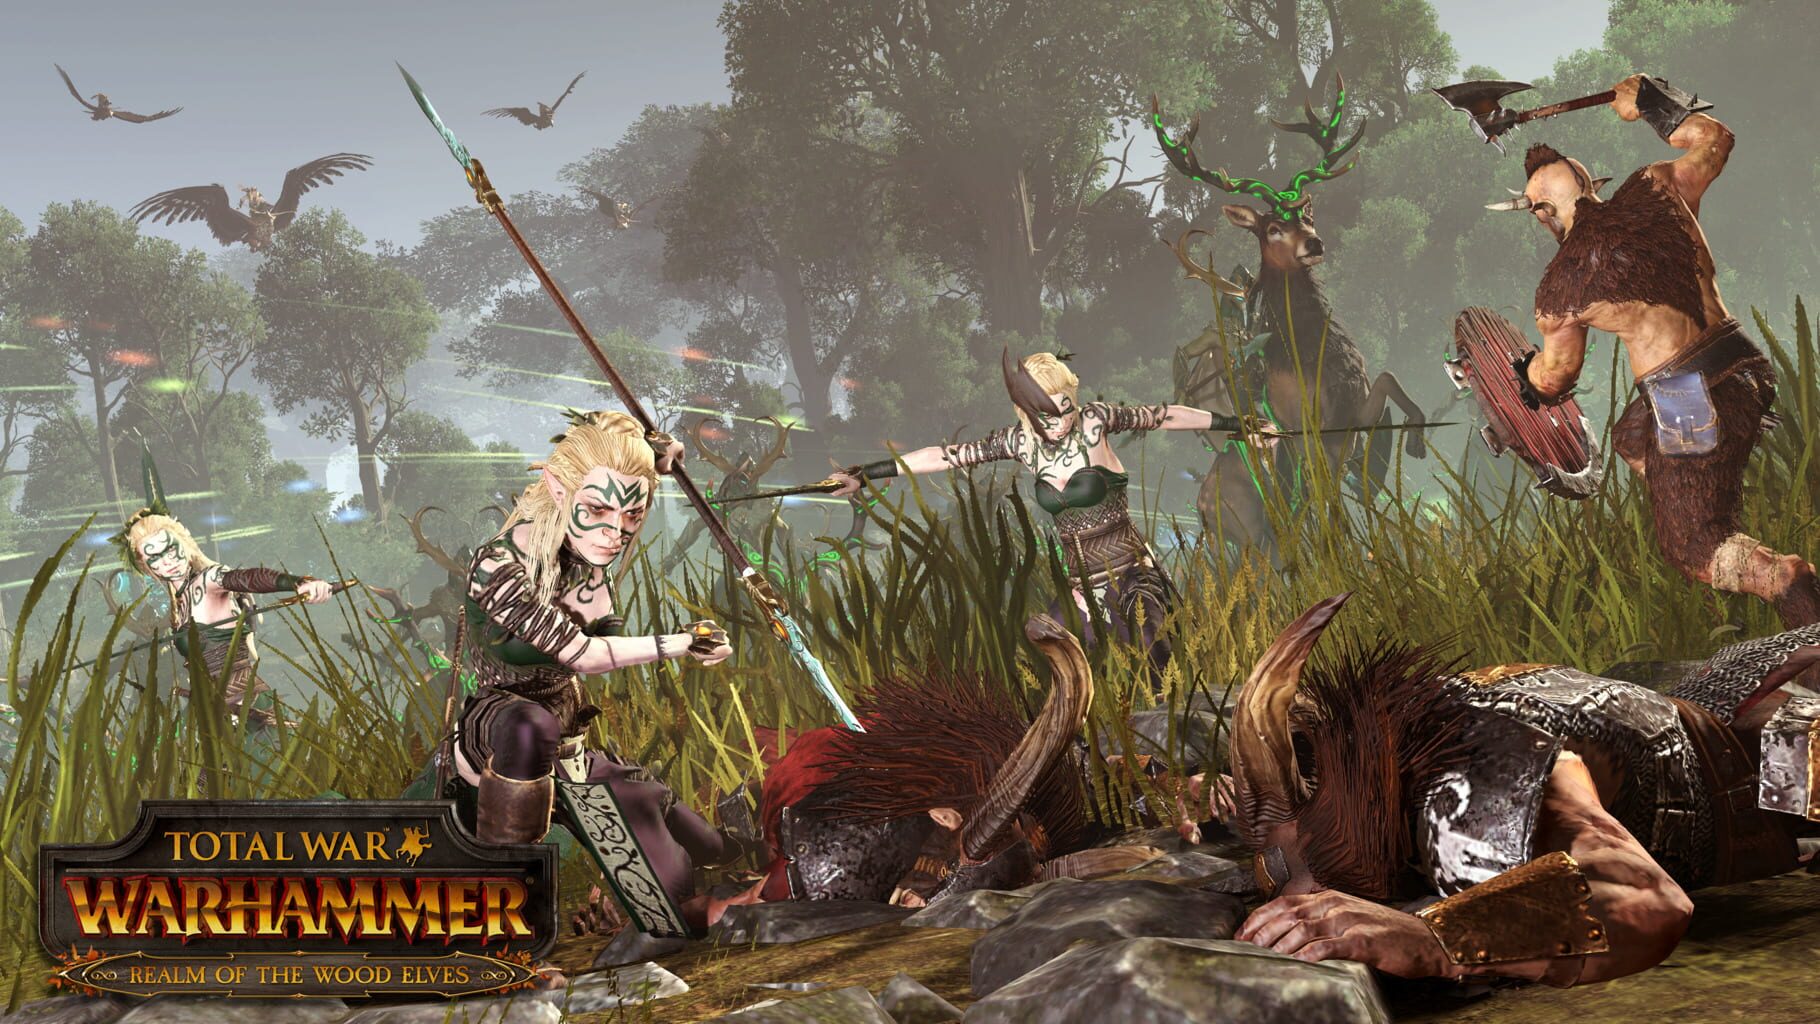 Captura de pantalla - Total War: Warhammer - Realm of the Wood Elves